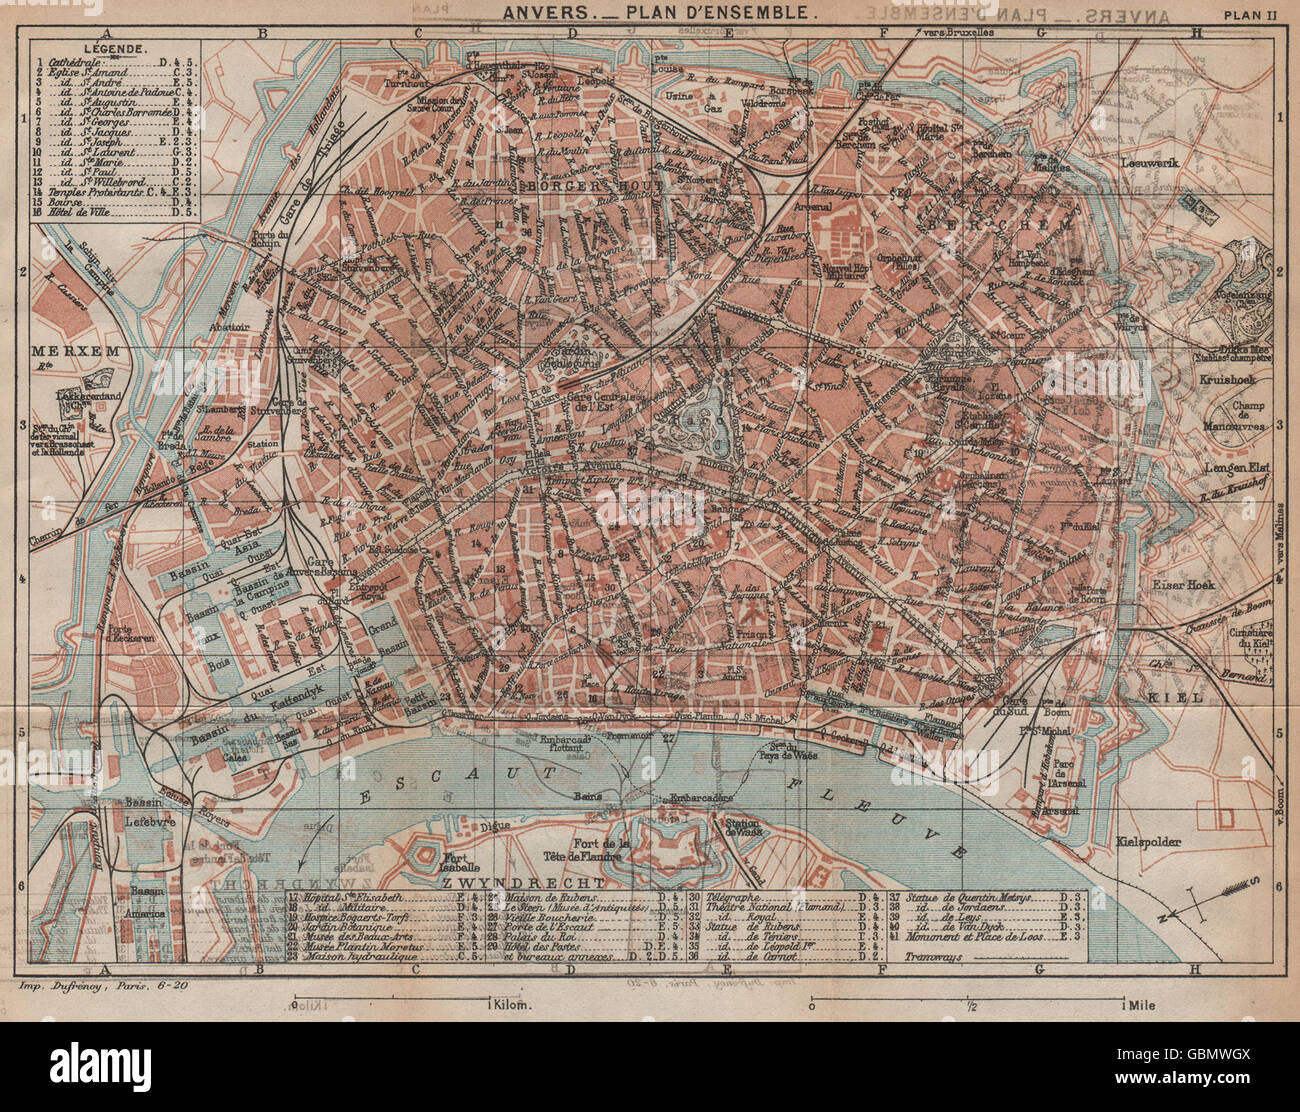 ANTWERPEN-PLAN D'ENSEMBLE. Vintage town city map plan. Belgium. Anvers, 1920 Stock Photo